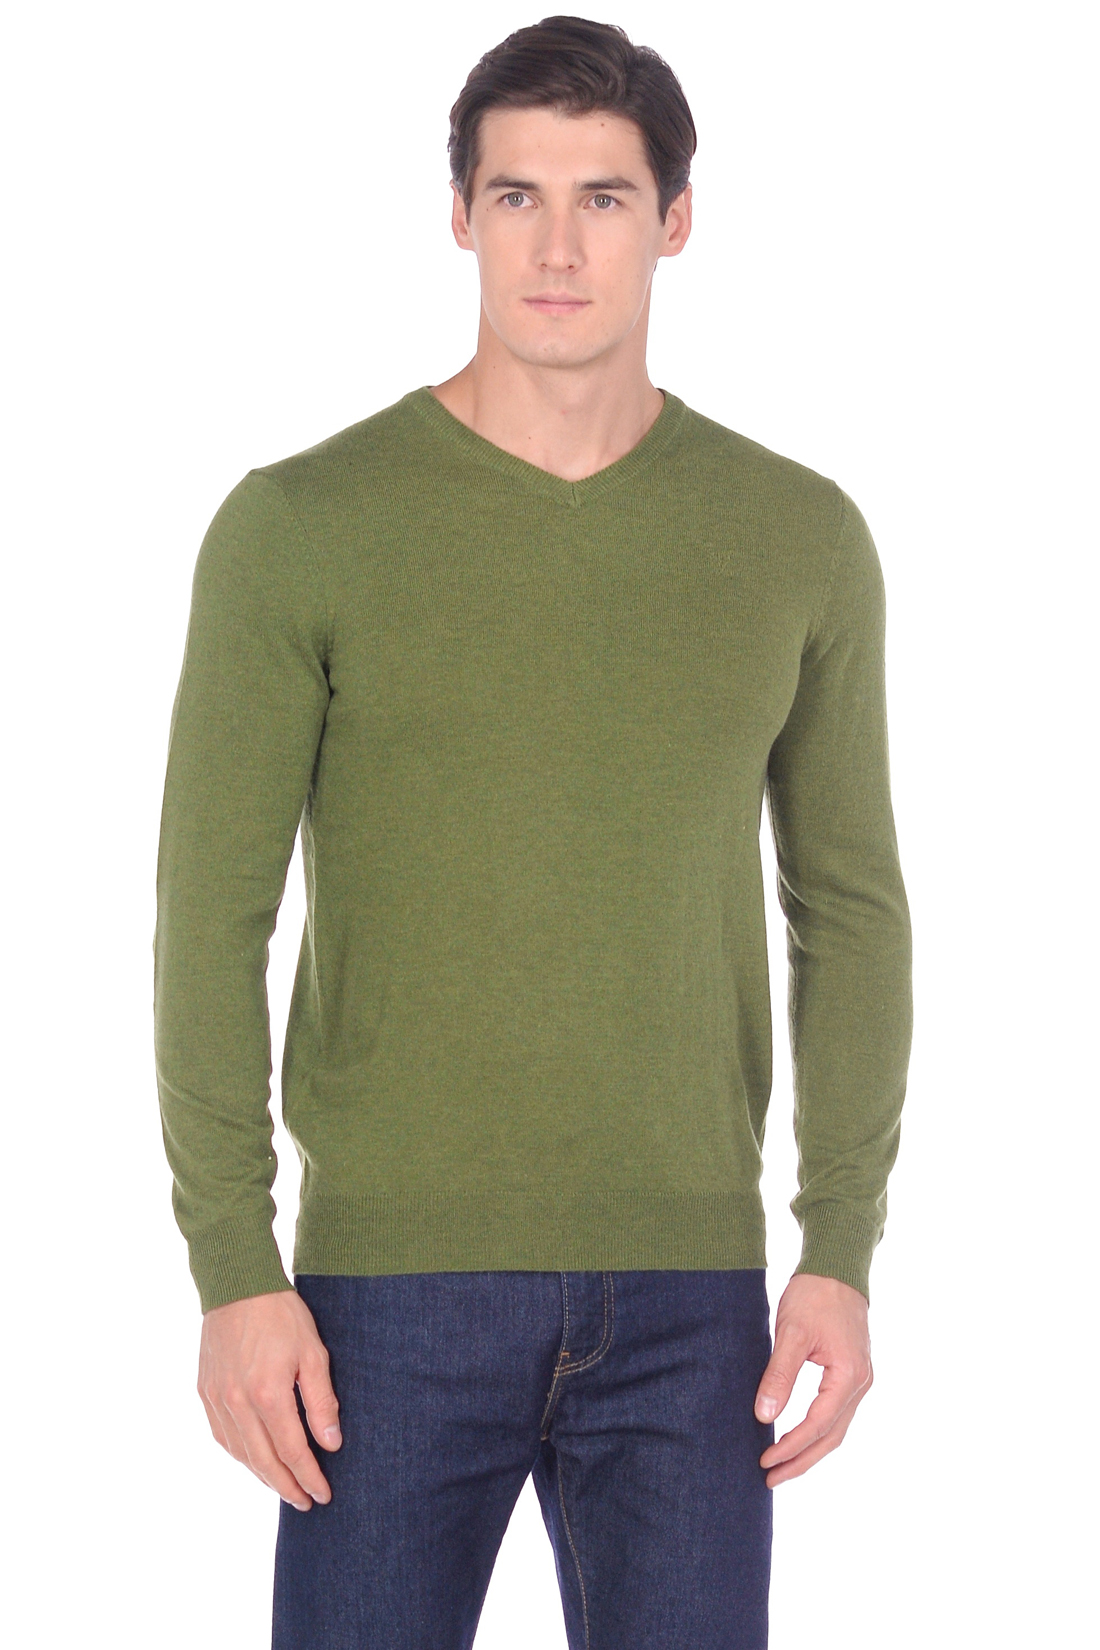 Базовый пуловер с шерстью (арт. baon B639702), размер XXL, цвет vine melange#зеленый Базовый пуловер с шерстью (арт. baon B639702) - фото 1